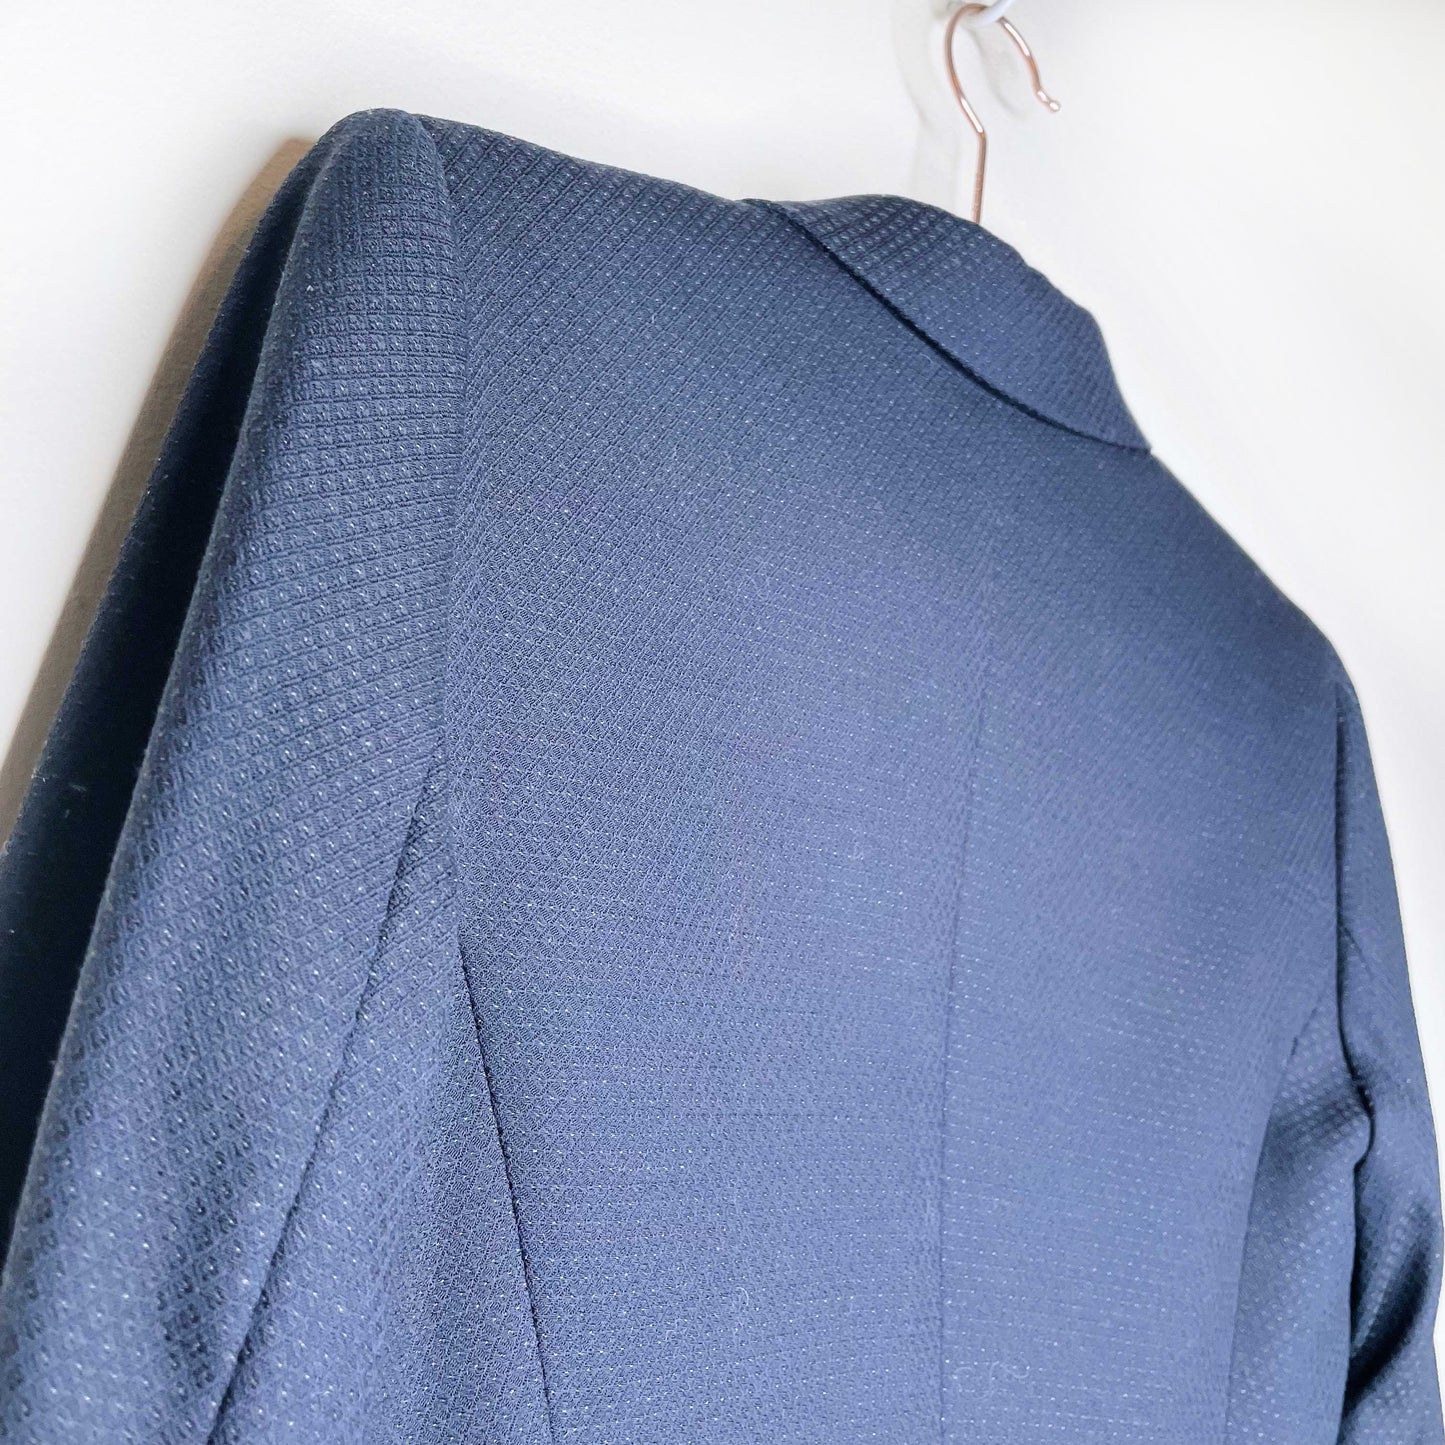 reiss navy blue wool single button blazer - size 4